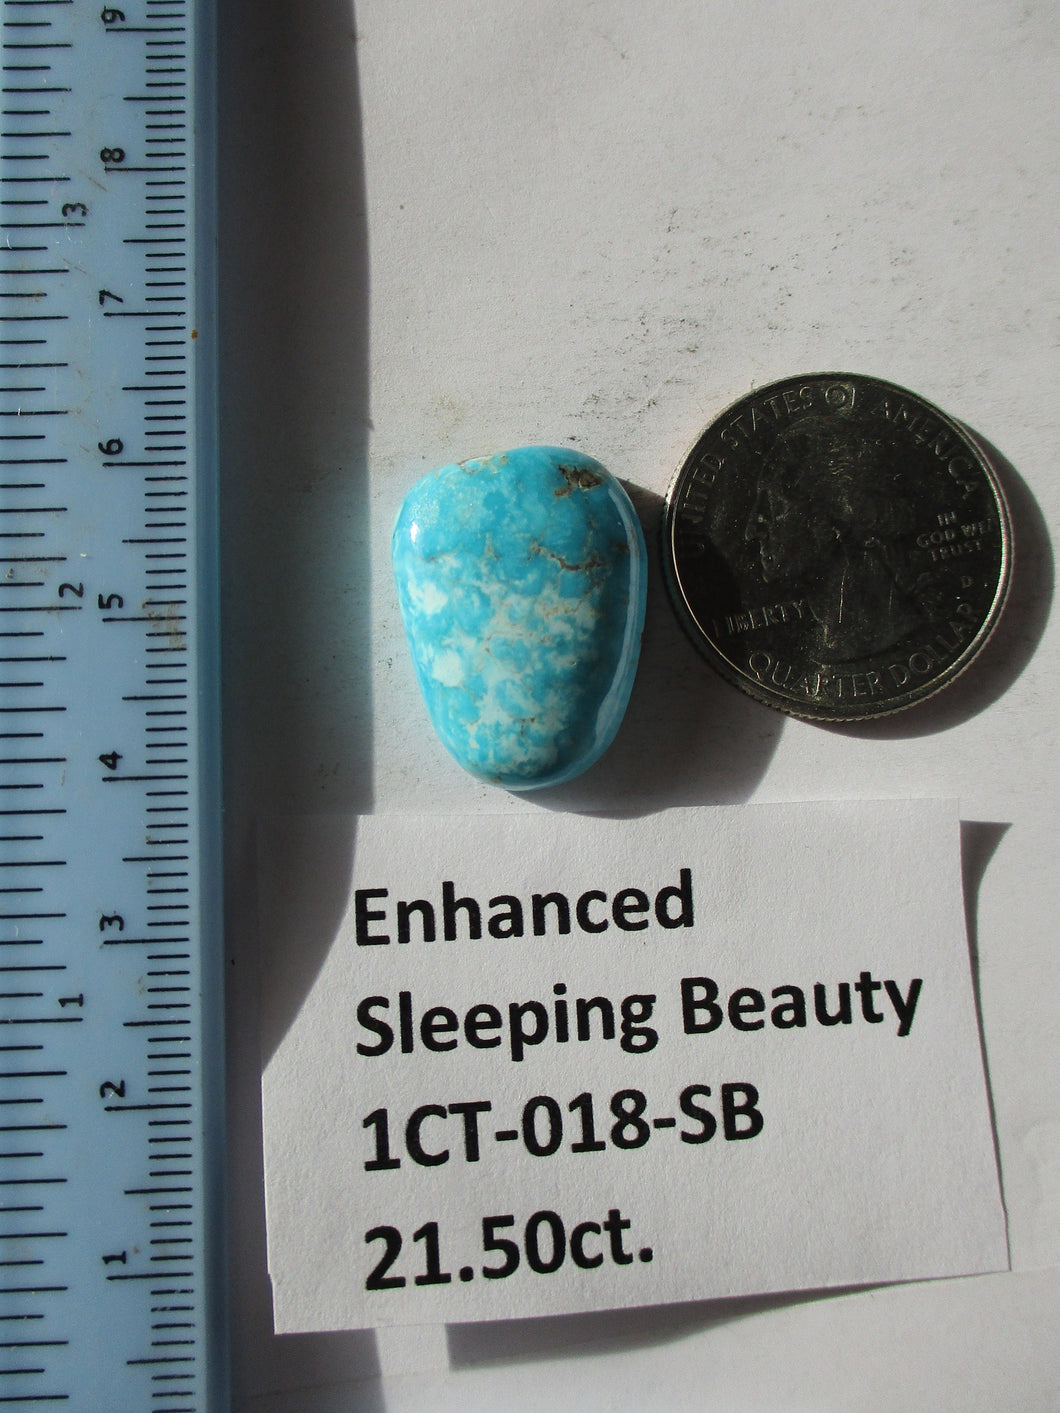 21.5 ct. (23x17x6 mm) Enhanced Sleeping Beauty Turquoise Cabochon Gemstone, # 1CT 018 s